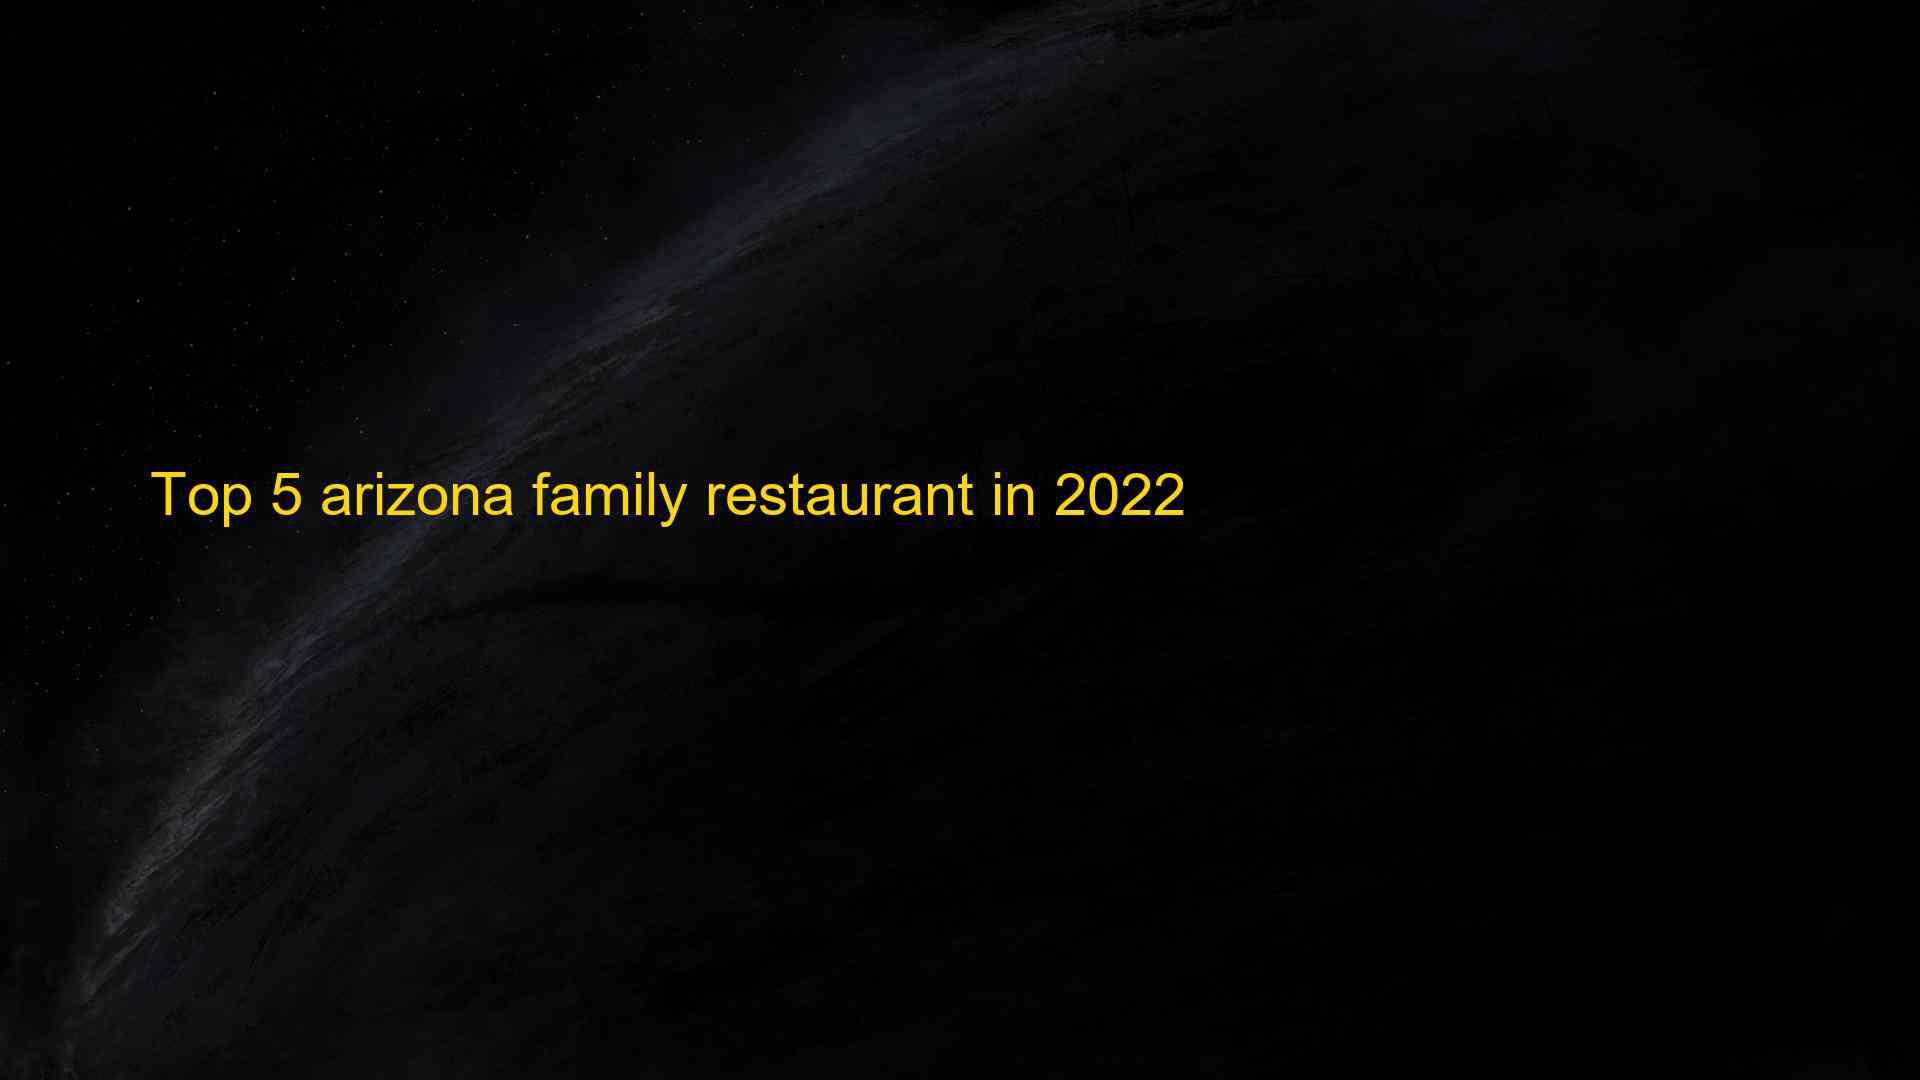 Top 5 arizona family restaurant in 2022 1662831272